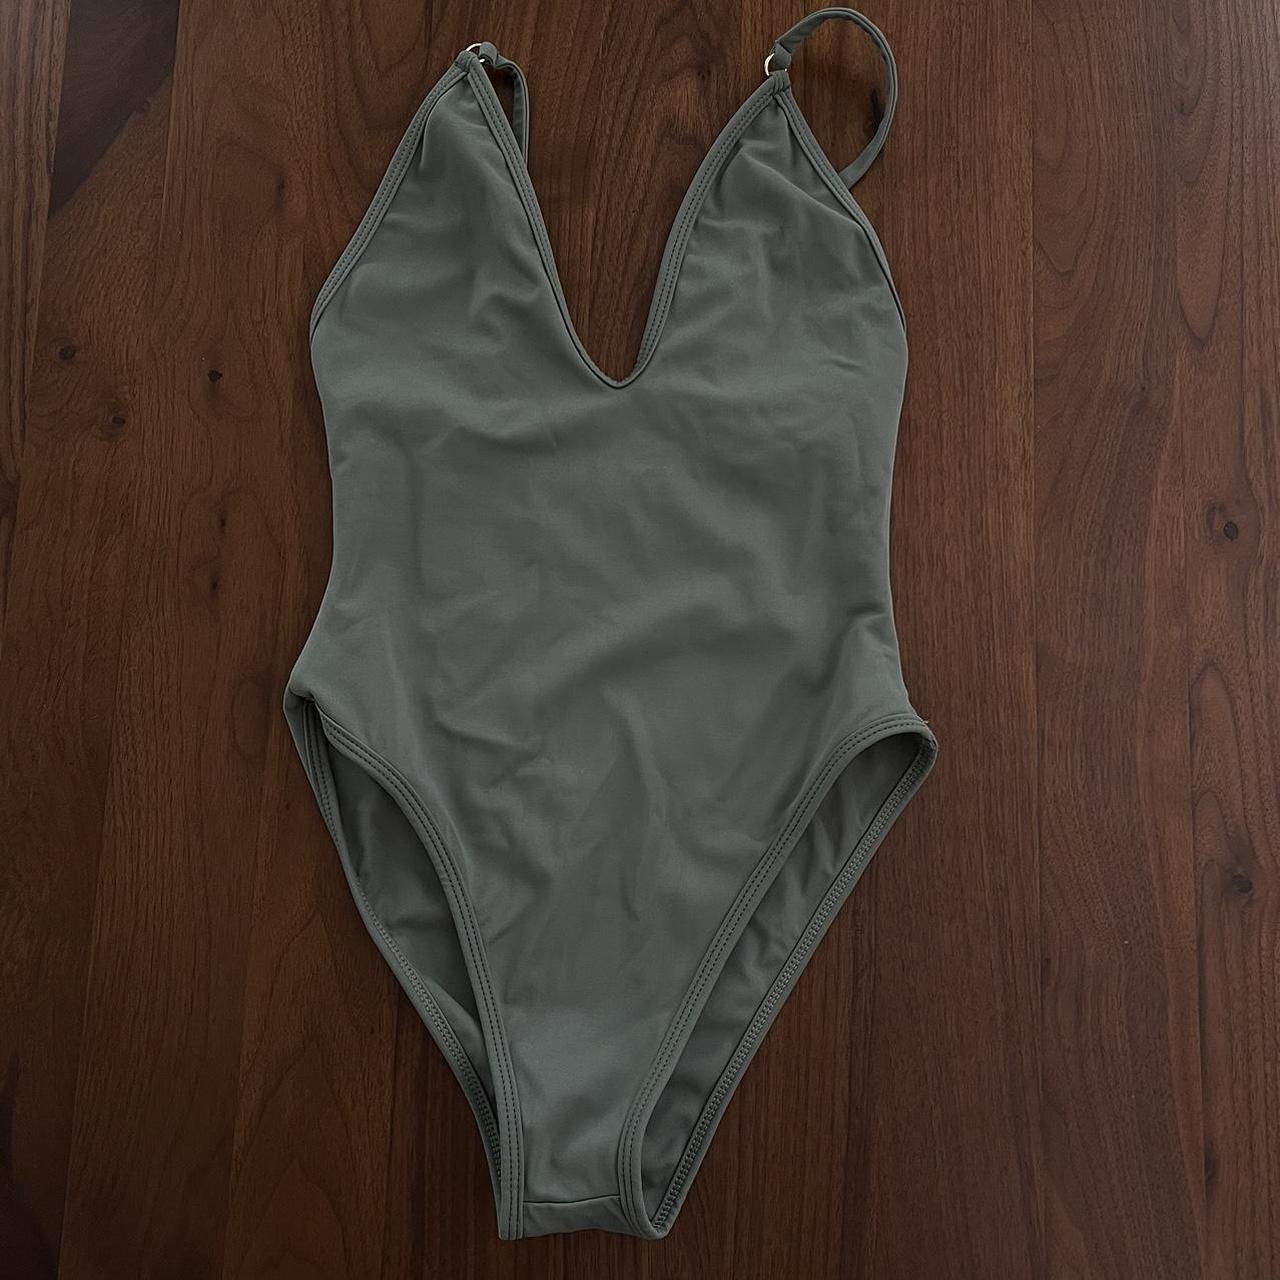 Gooseberry Intimates one piece bathing suit 💐🩱 white... - Depop